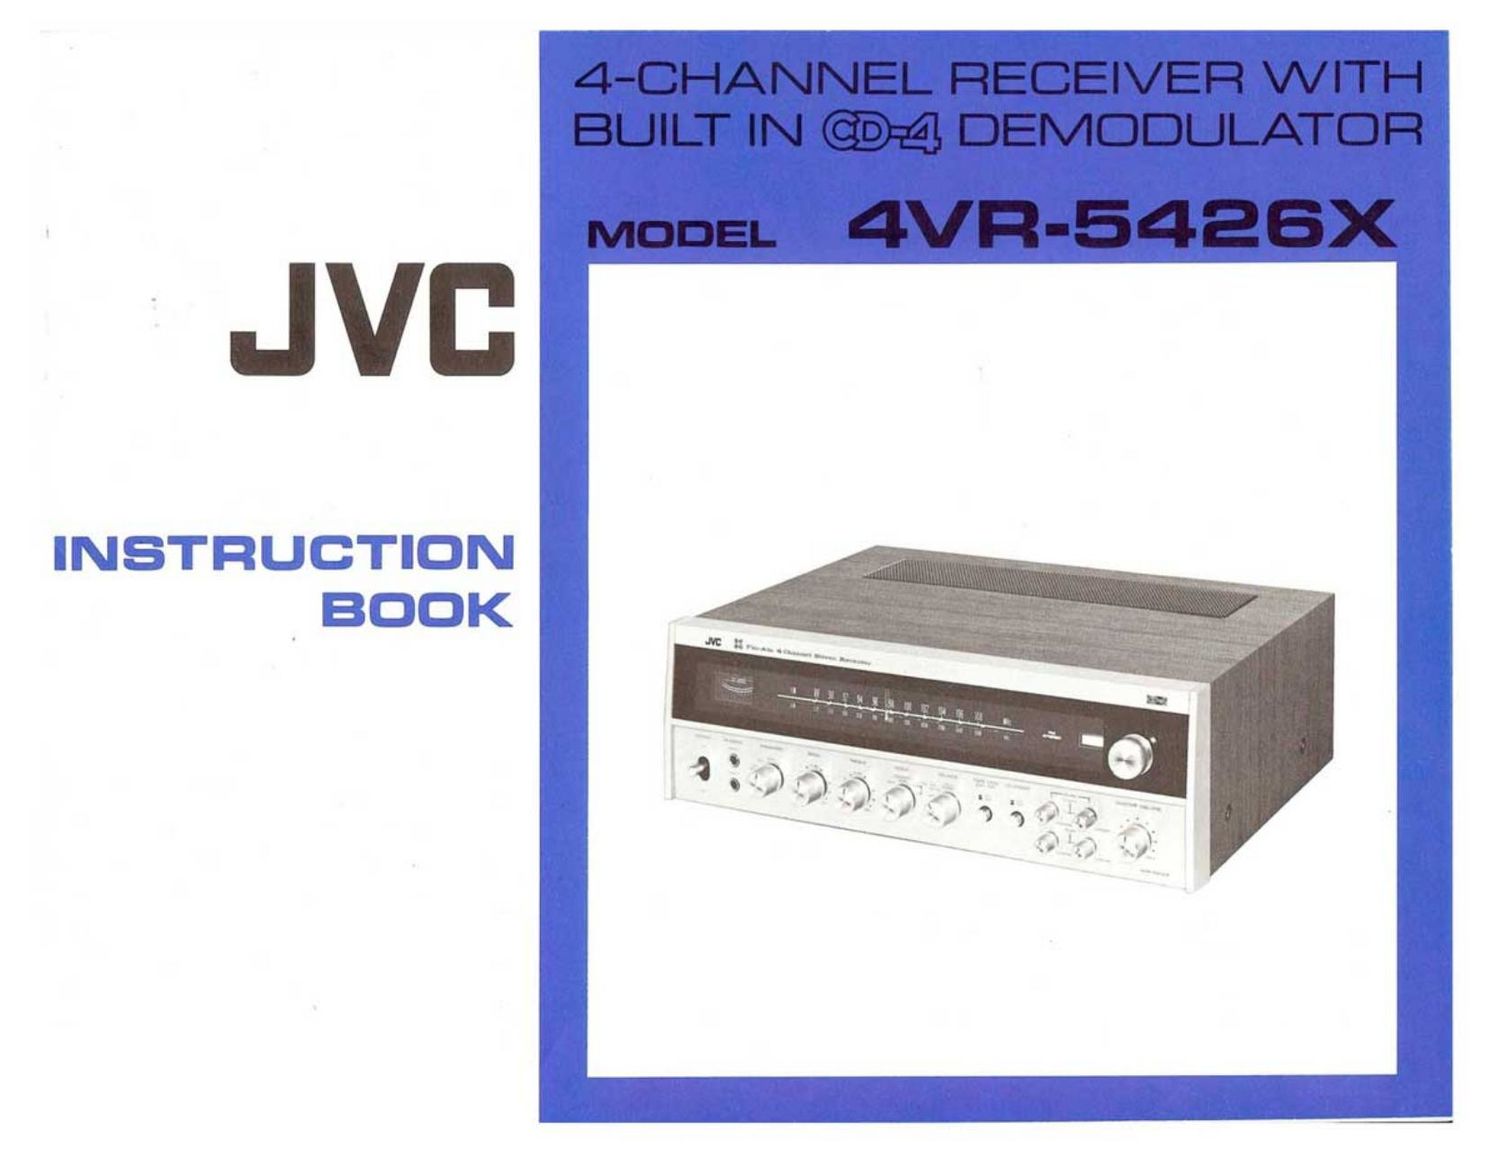 Jvc 4VR 5426 X Owners Manual